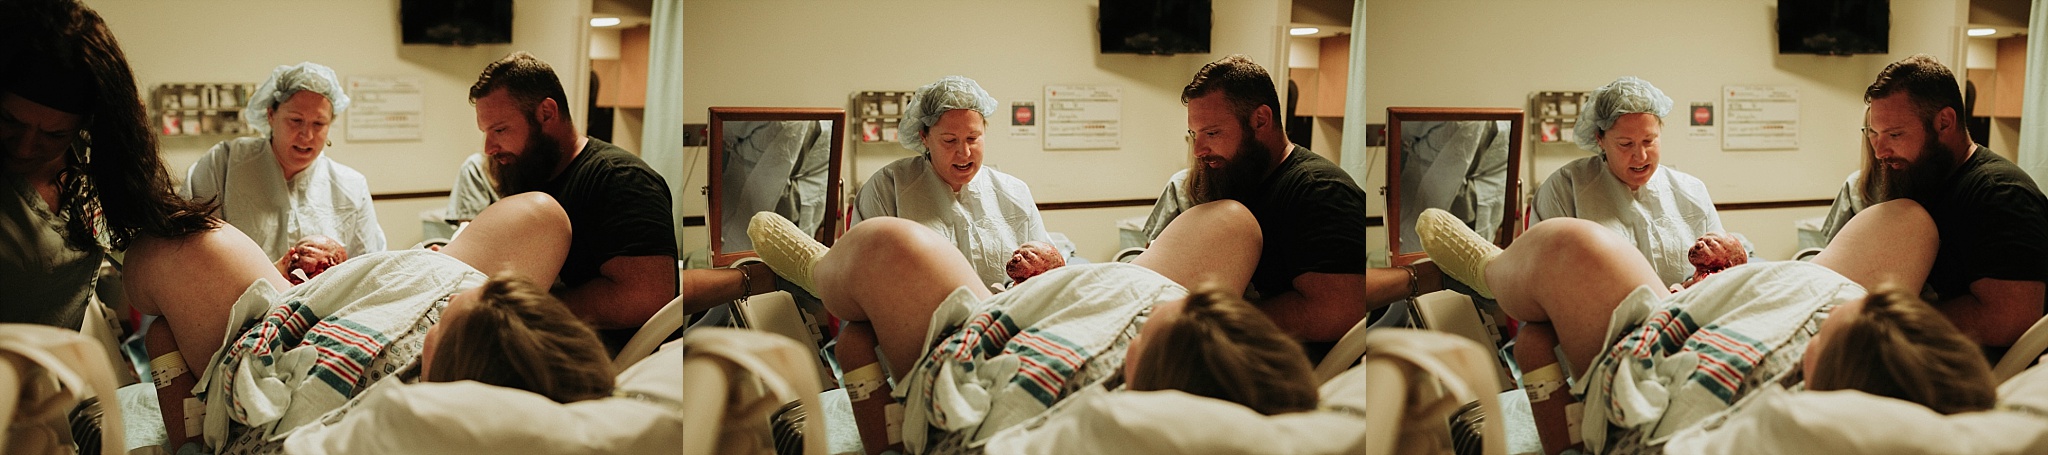 Cleveland Birth Photography | Birth Maternity Fresh 48